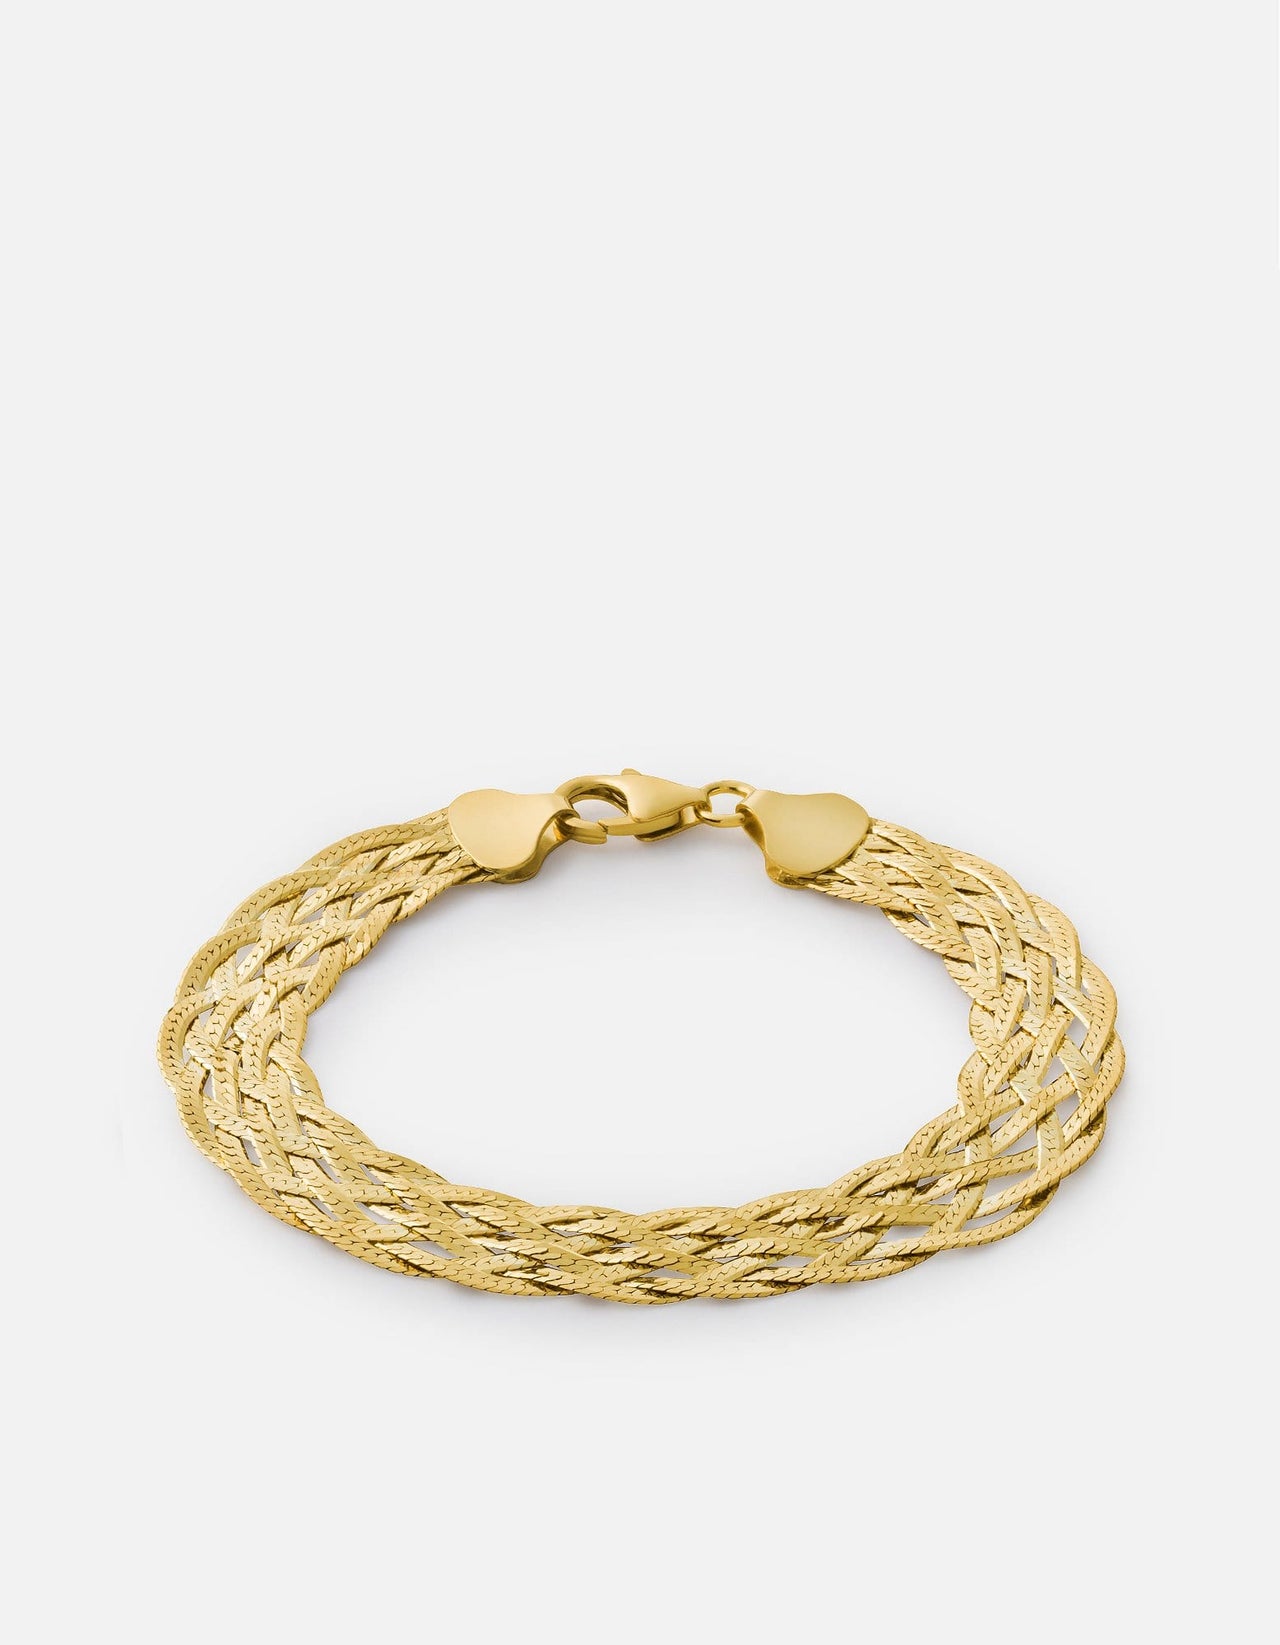 Gold Color Lion Head Braided Bracelets & Bangles Black Rope Thread Bracelet  Women Men Wrist Chain Charm Jewelry Pulseira,Black Gold Color :  Amazon.co.uk: Fashion